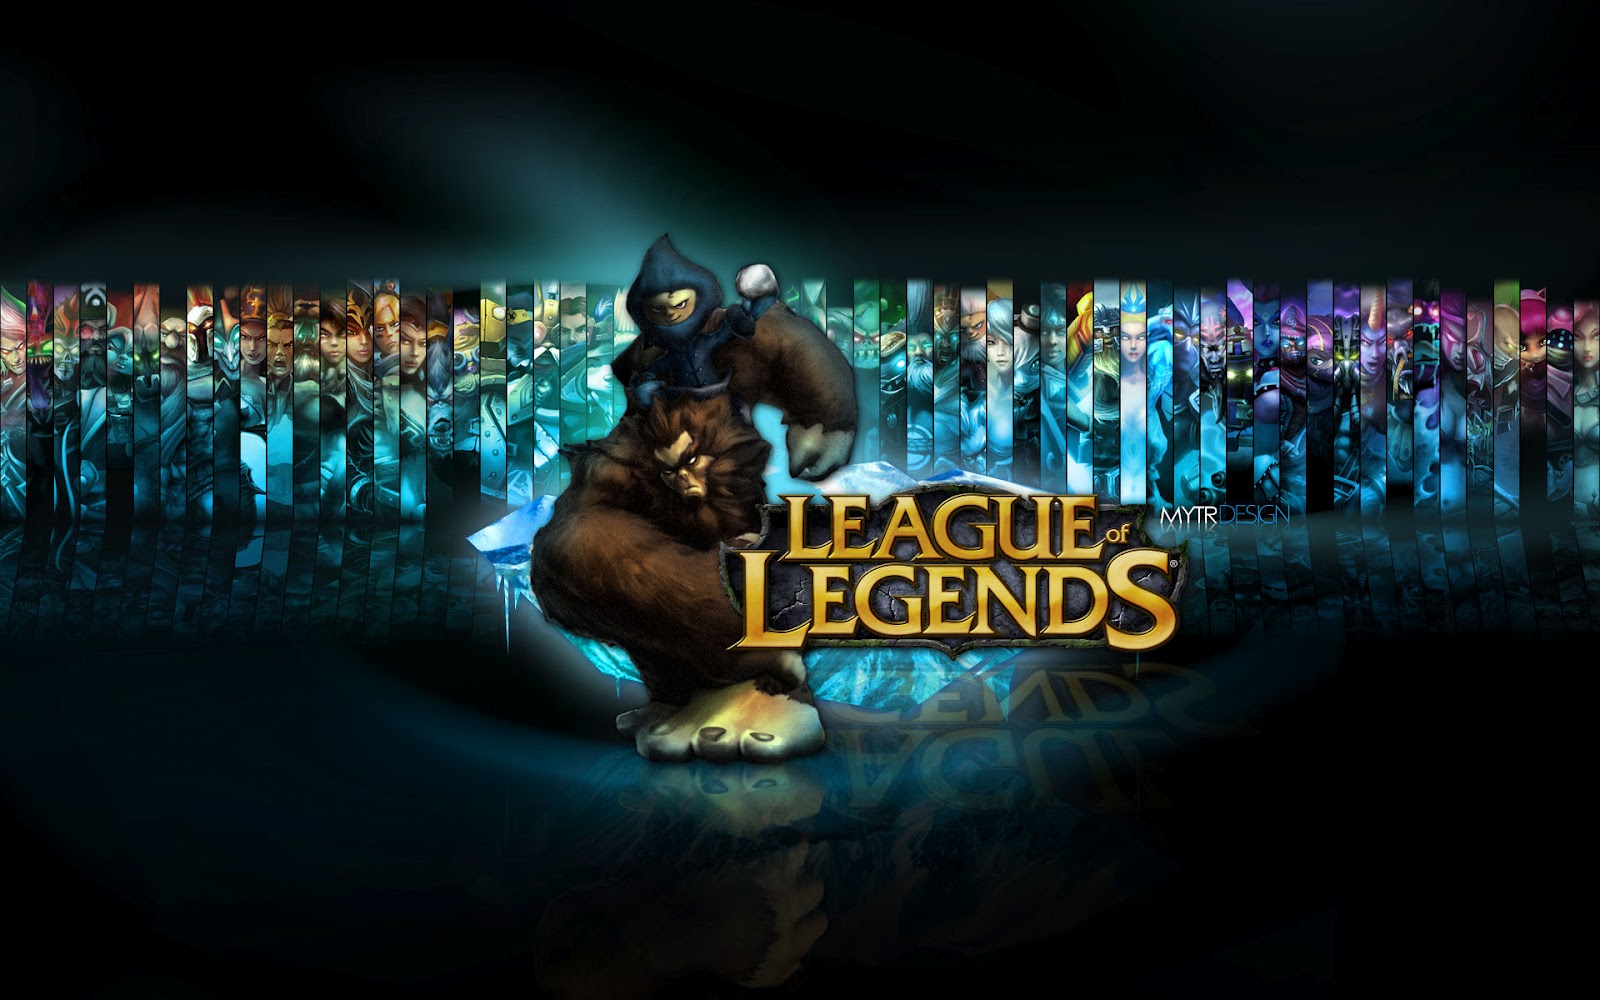 Wallpaper Y Background Del League Of Legends